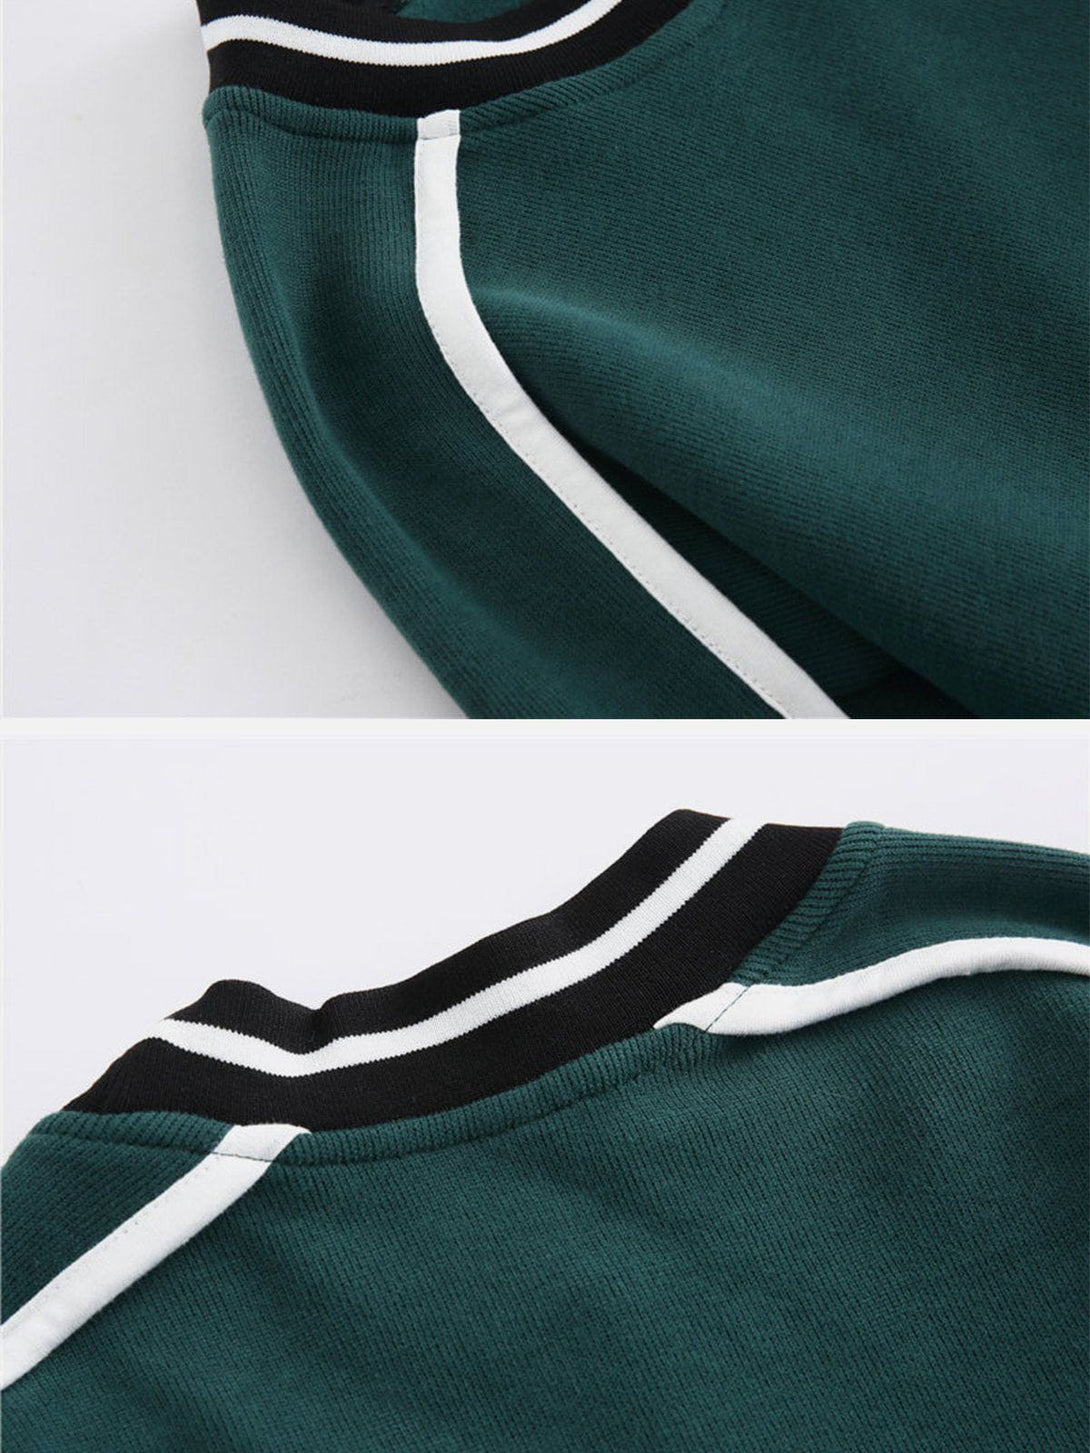 Levefly - Vintage Patchwork Letter FRON Sweatshirt - Streetwear Fashion - levefly.com